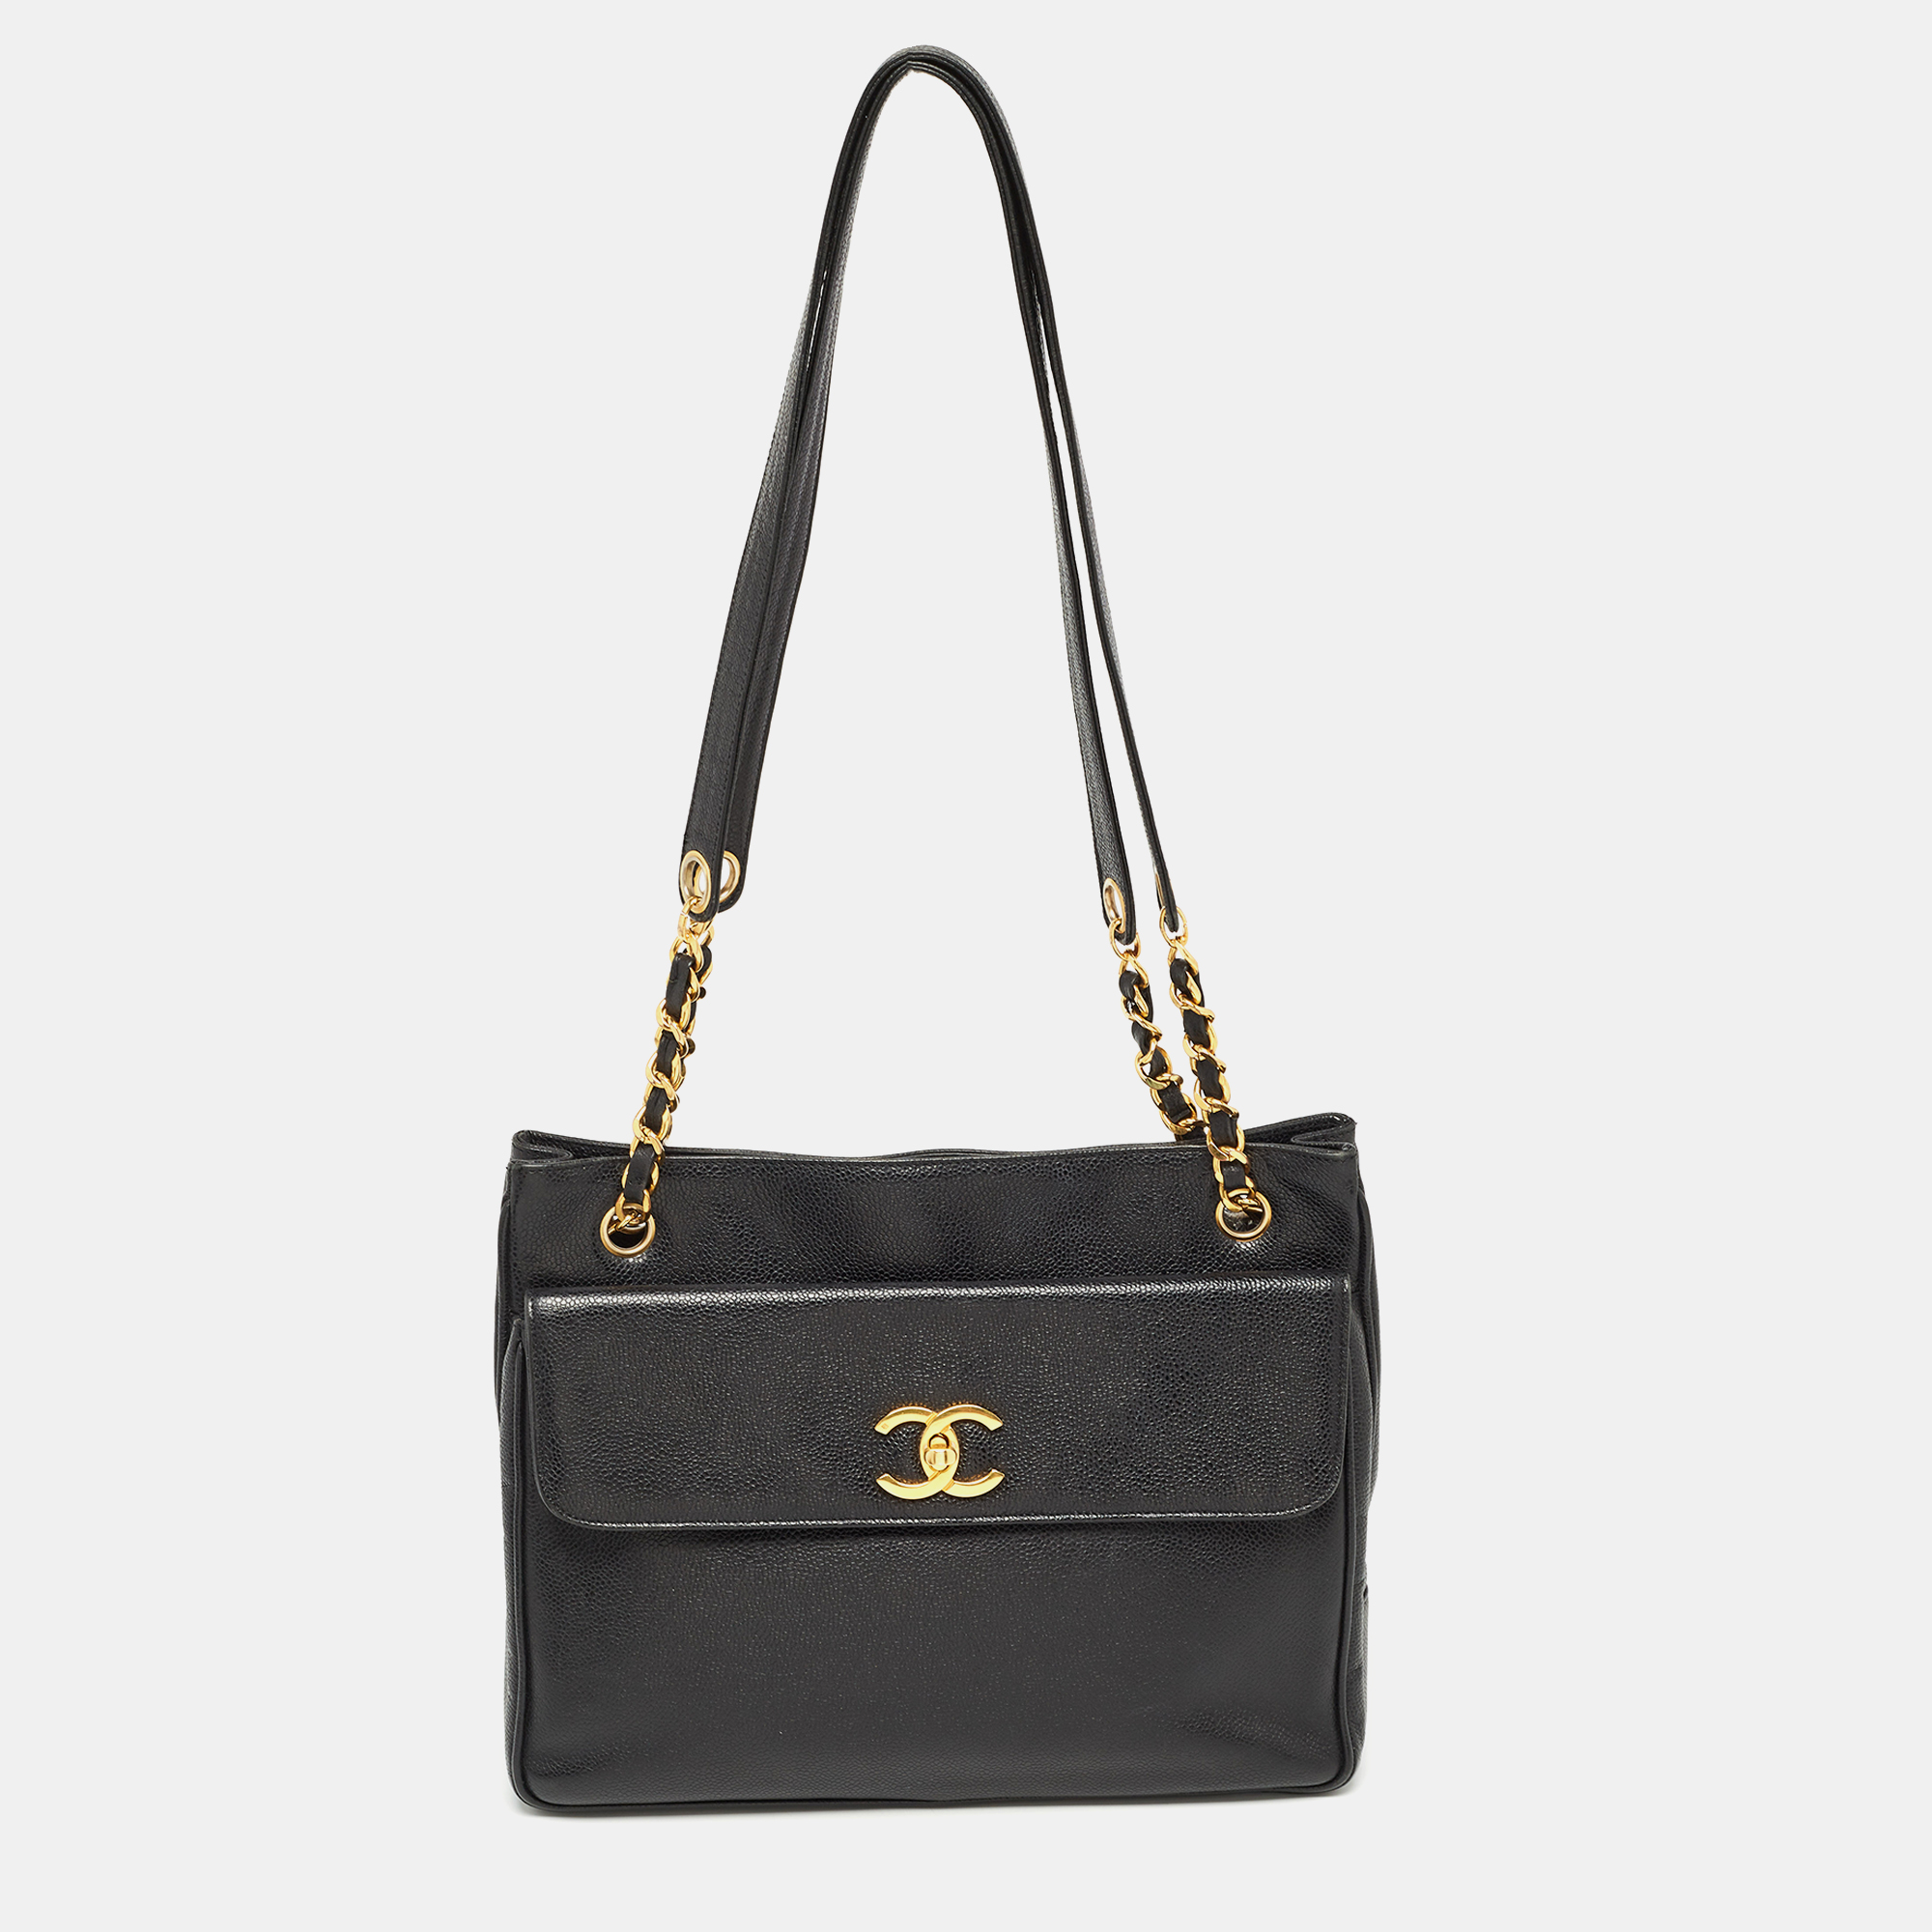 Pre-owned Chanel Black Caviar Leather Classic Pocket Shoulder Bag